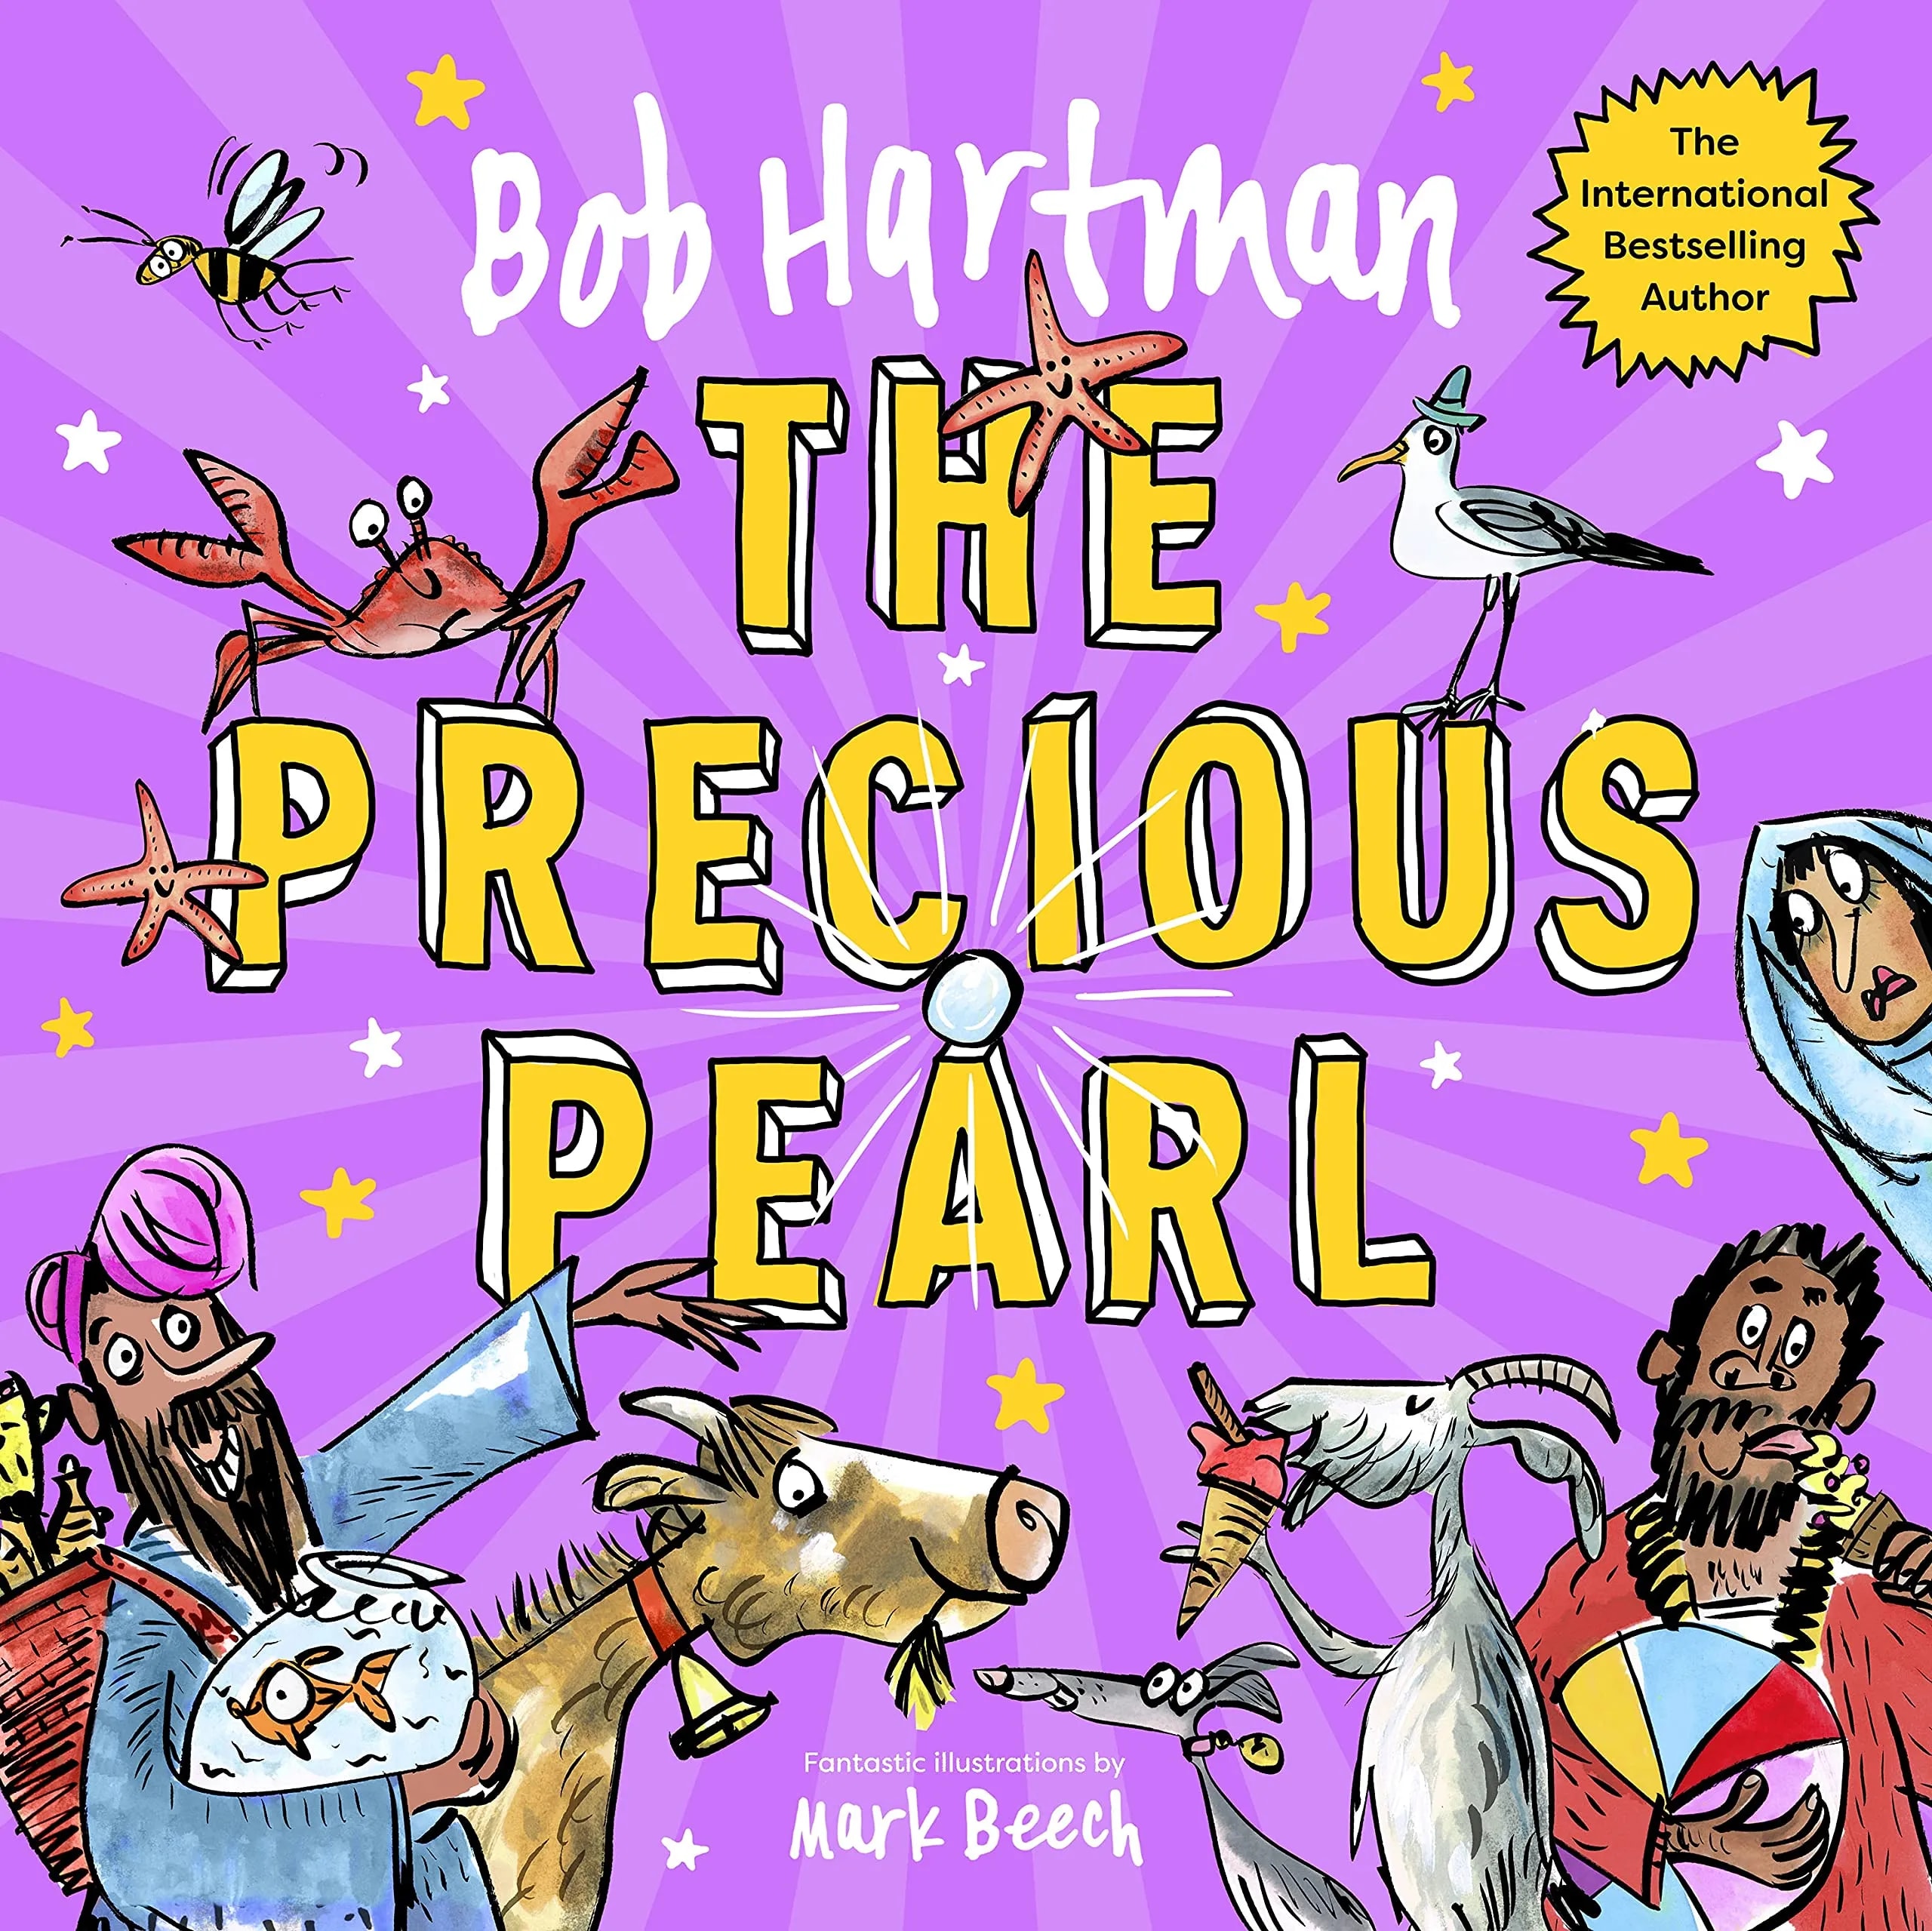 The Precious Pearl (Bob Hartman's Rhyming Parables)